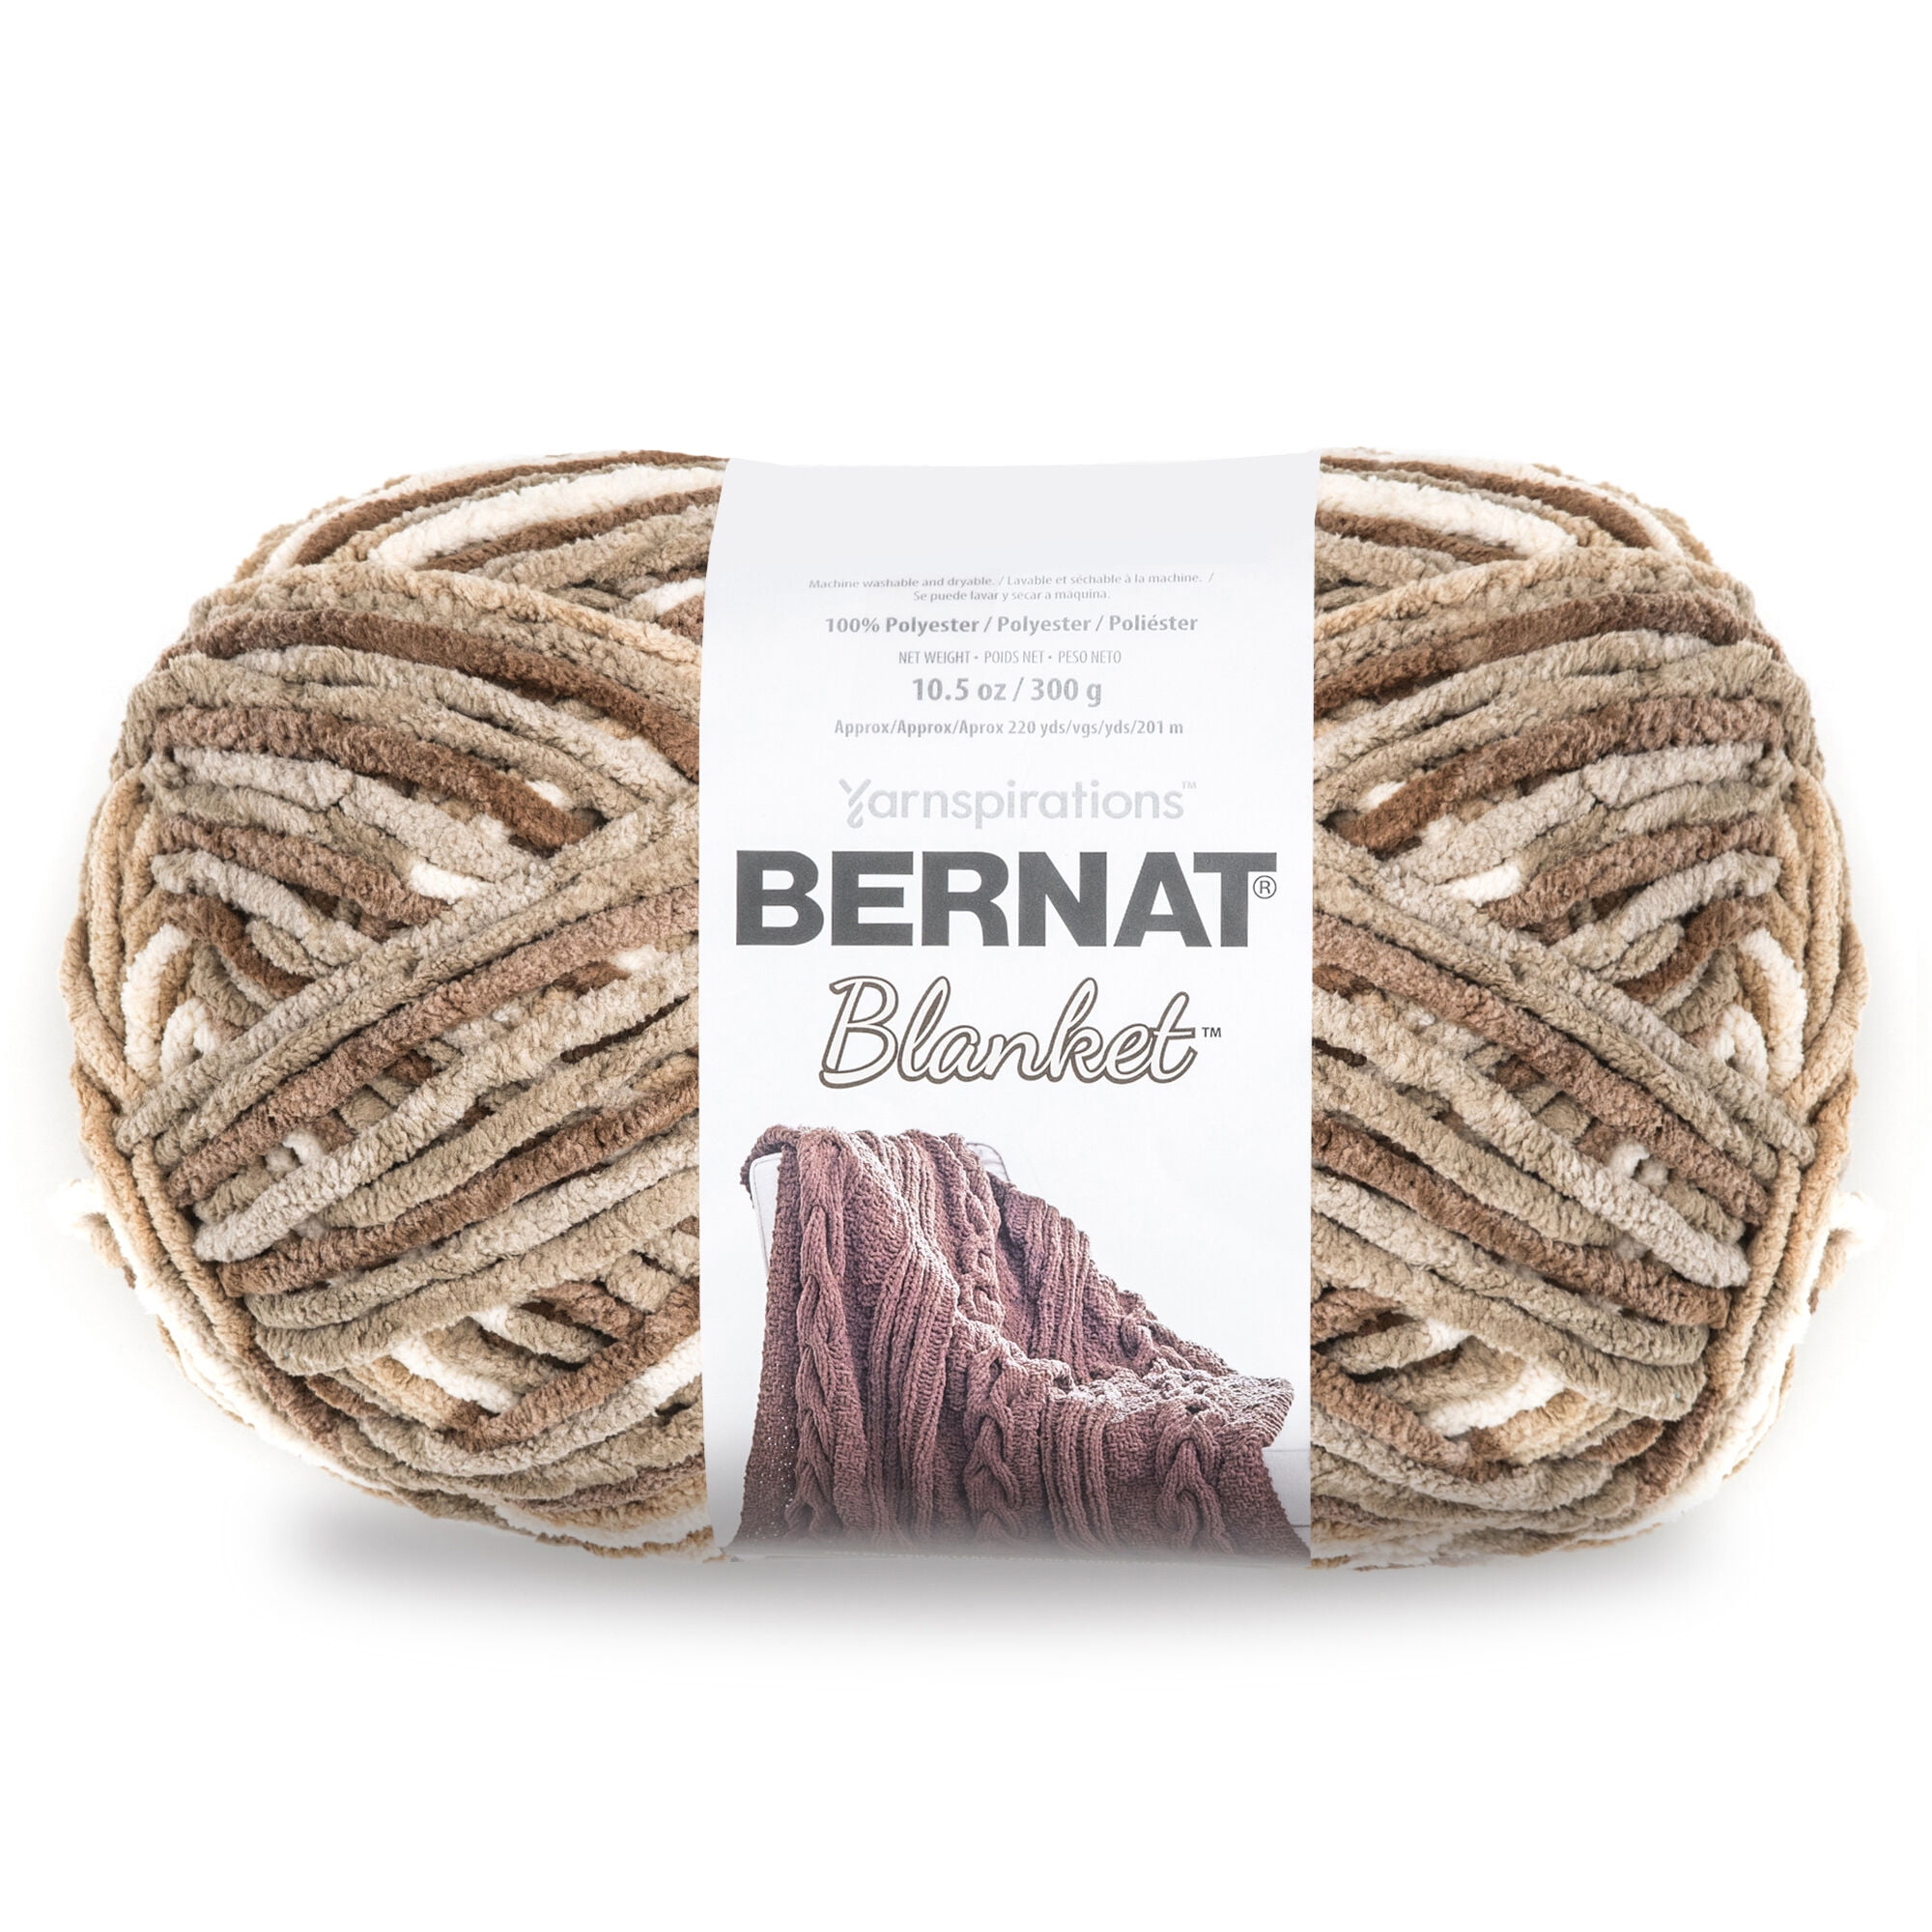 Bernat Blanket 6 Super Bulky Polyester Yarn, Sand 10.5oz/300g, 220